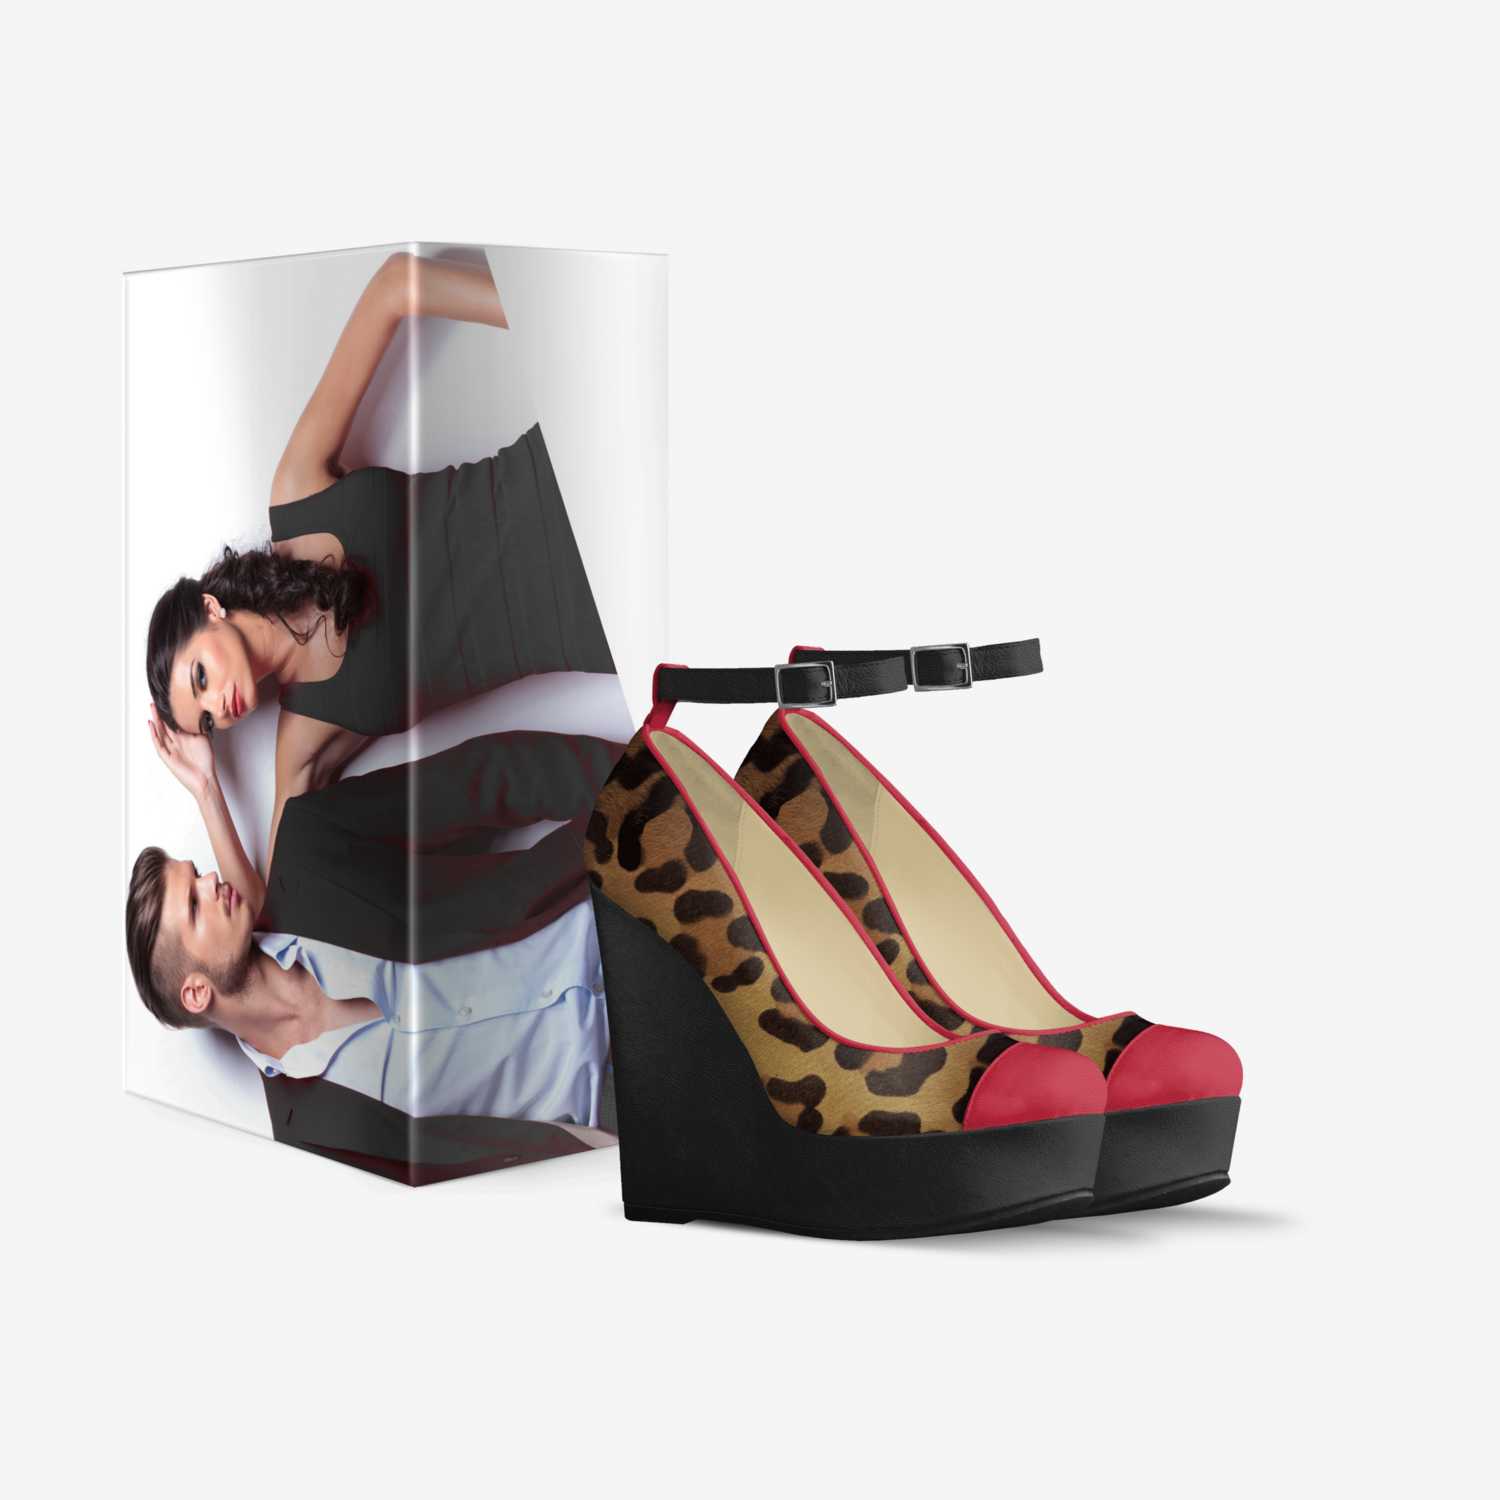 Drama Kween custom made in Italy shoes by Chandra Dawson | Box view